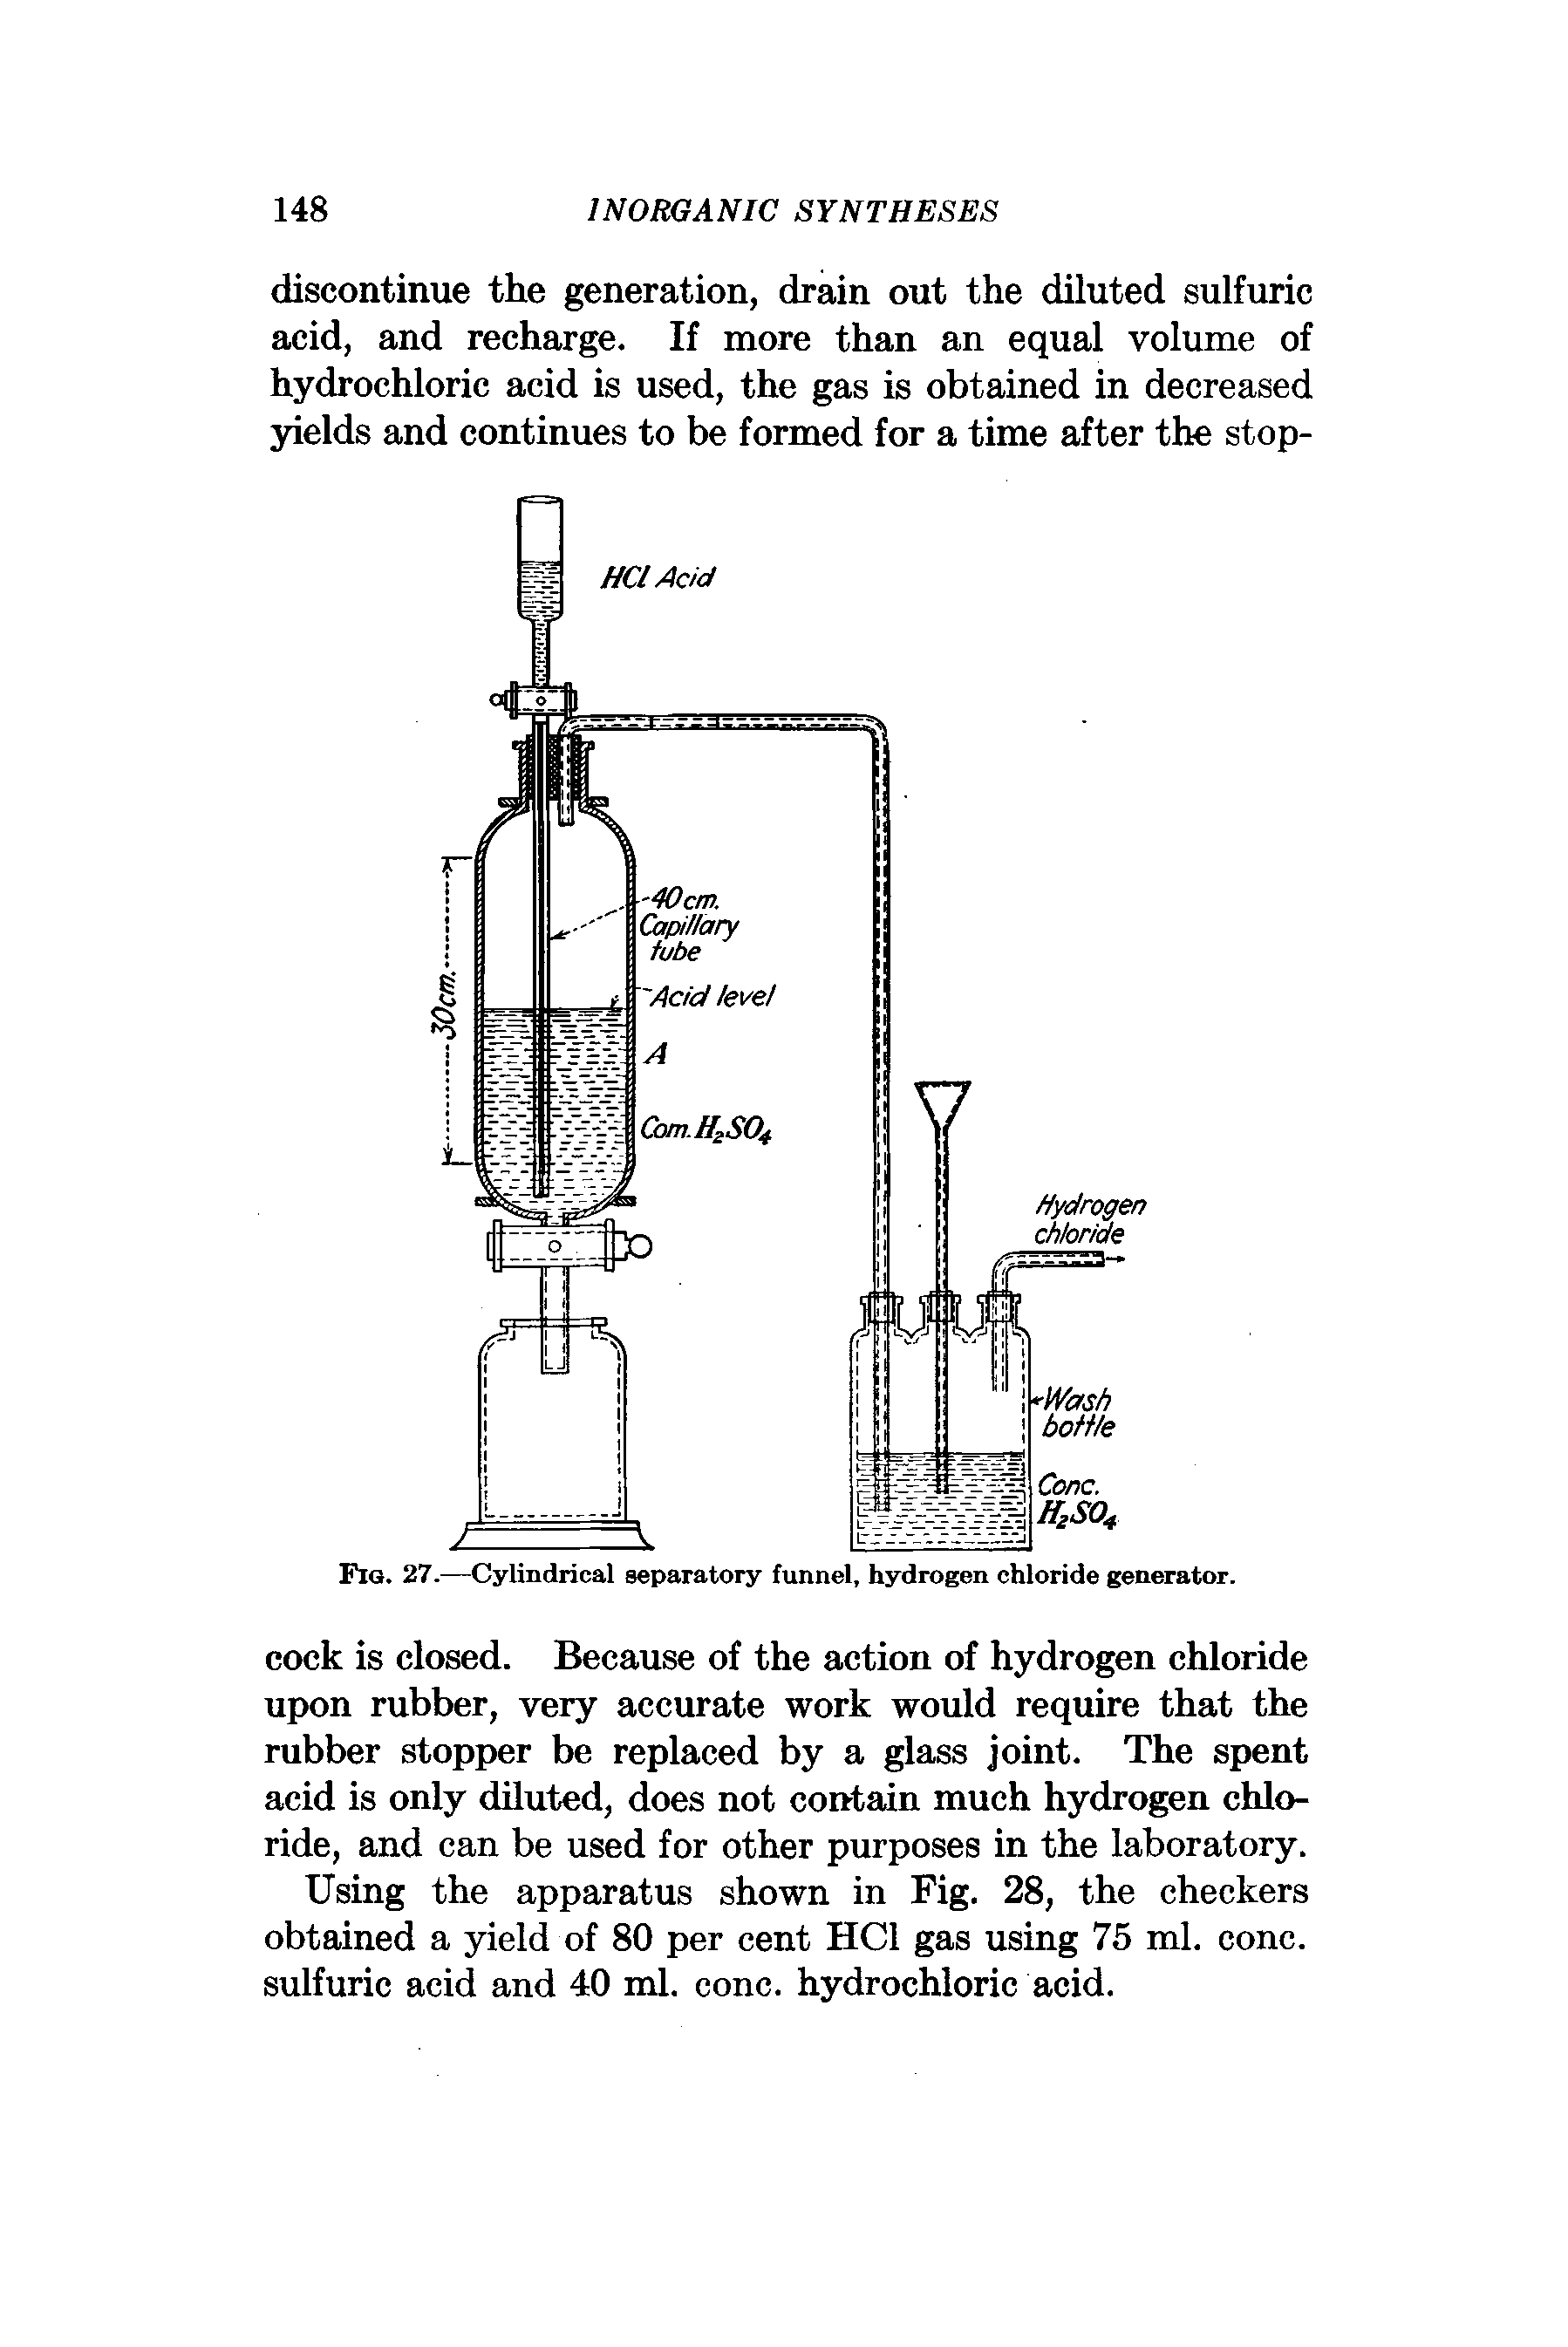 Fig. 27.—Cylindrical separatory funnel, hydrogen chloride generator.